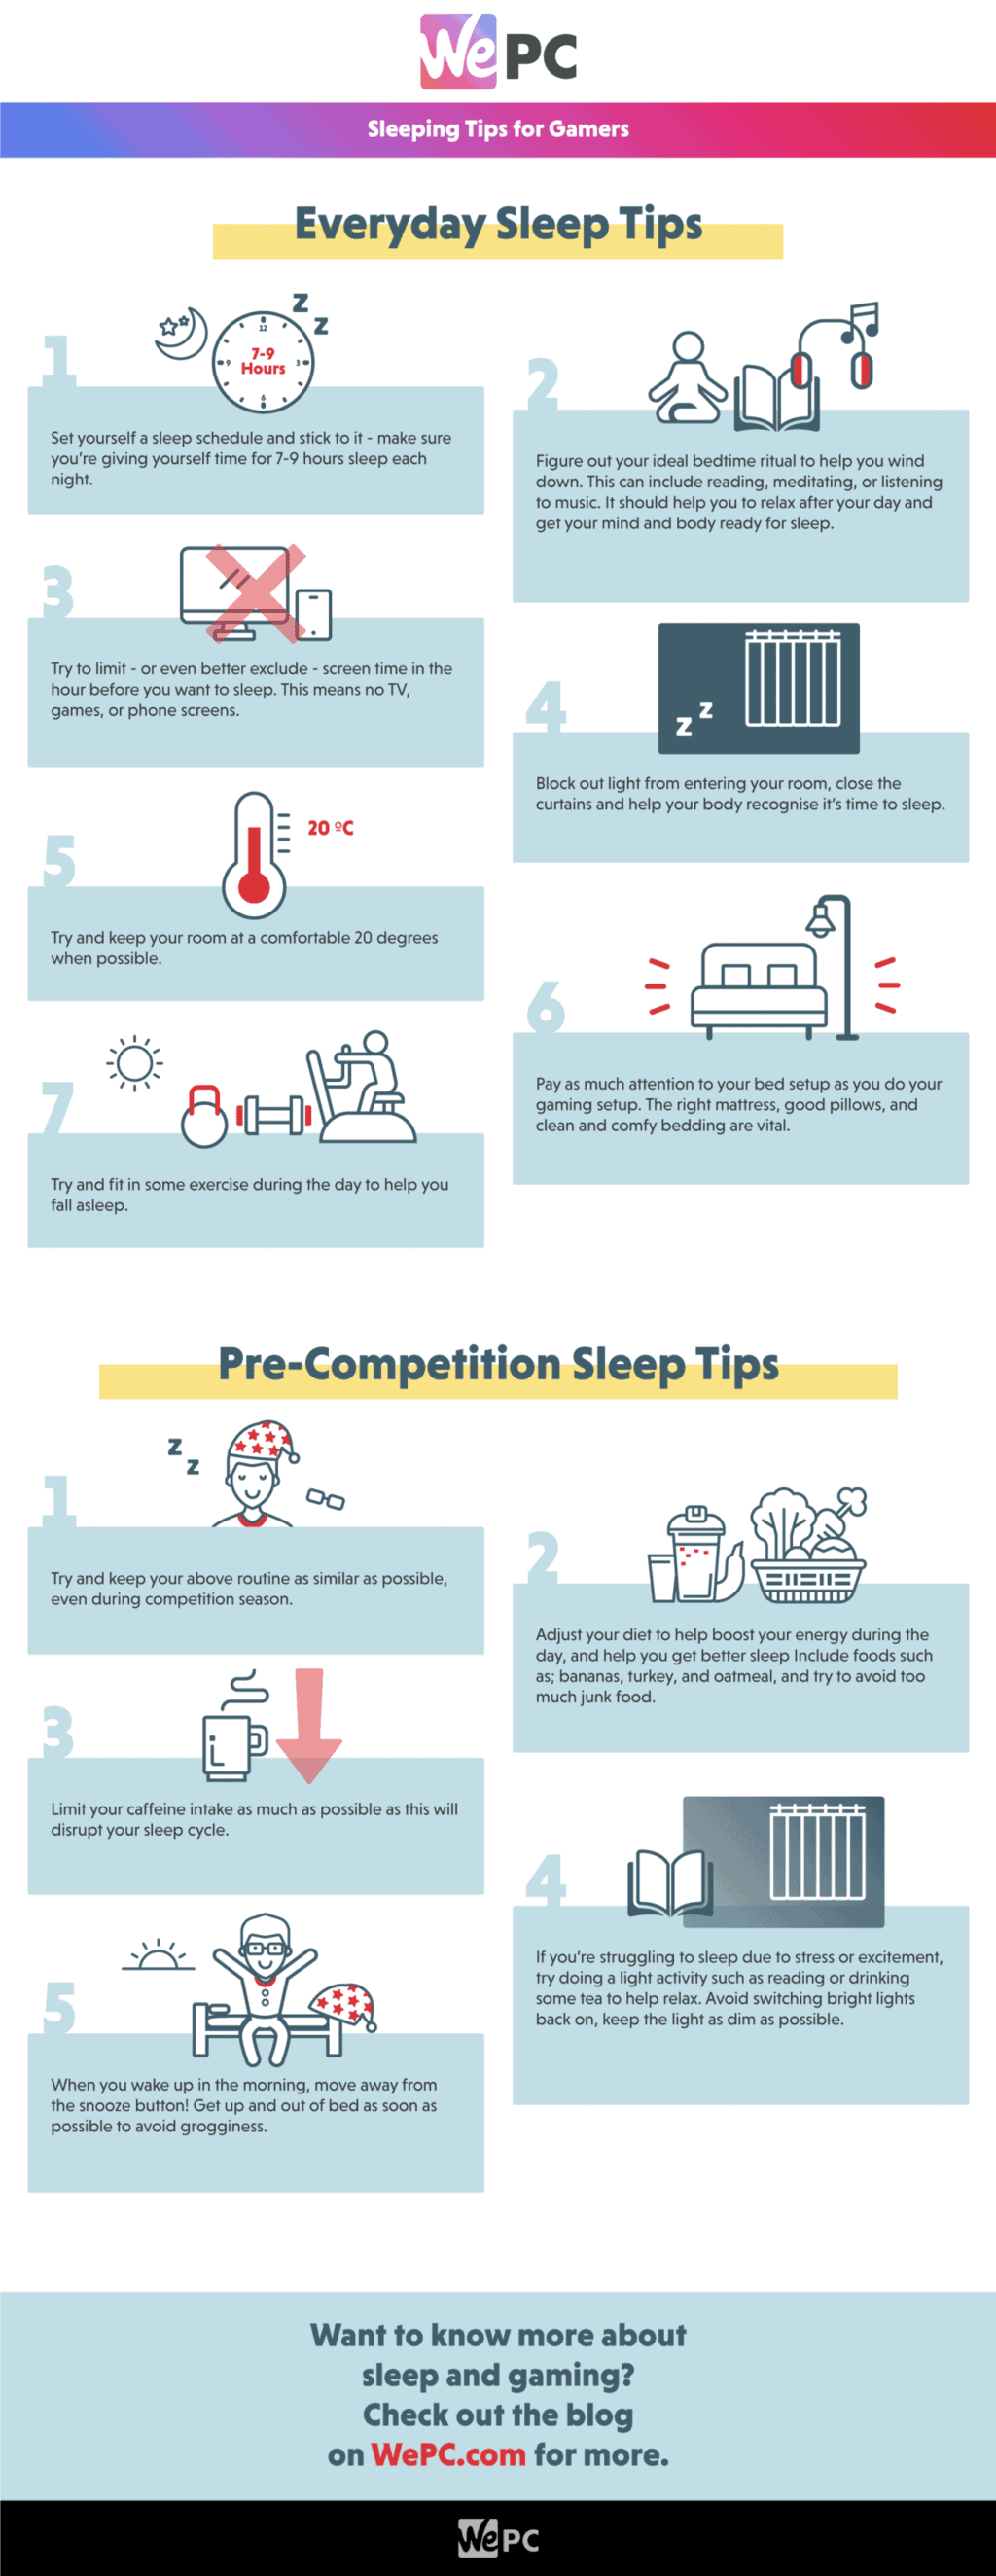 3 Sleeping Tips